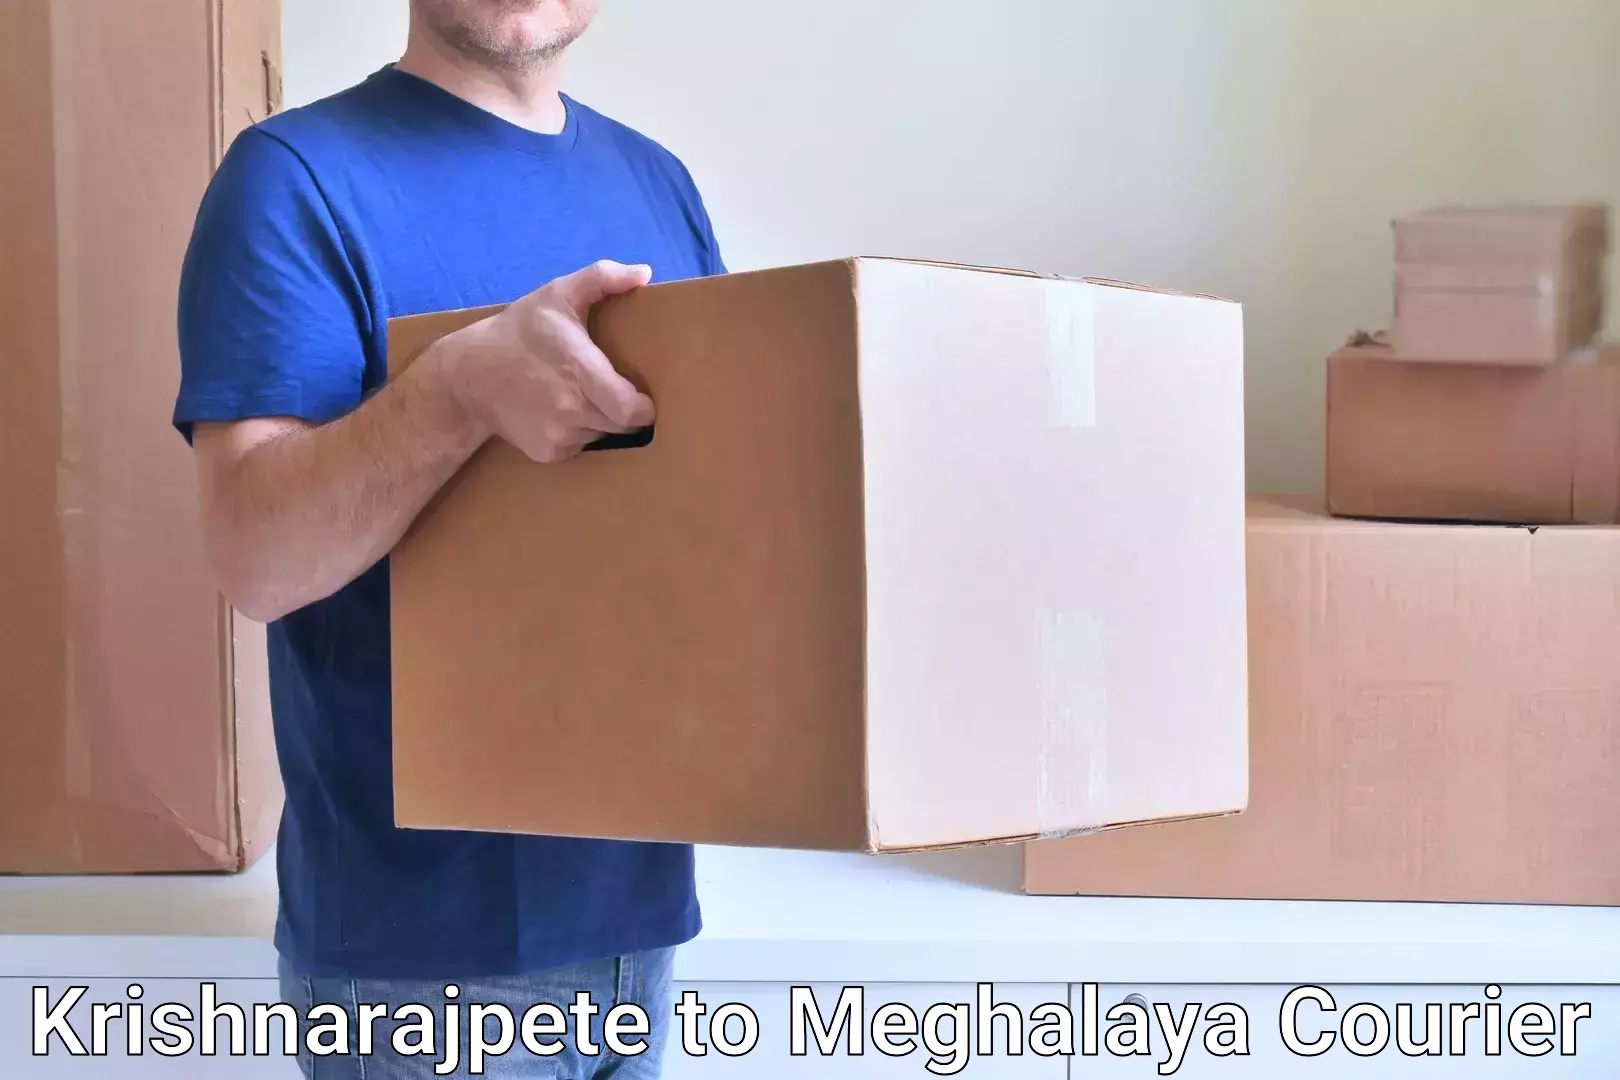 Global shipping networks Krishnarajpete to Meghalaya